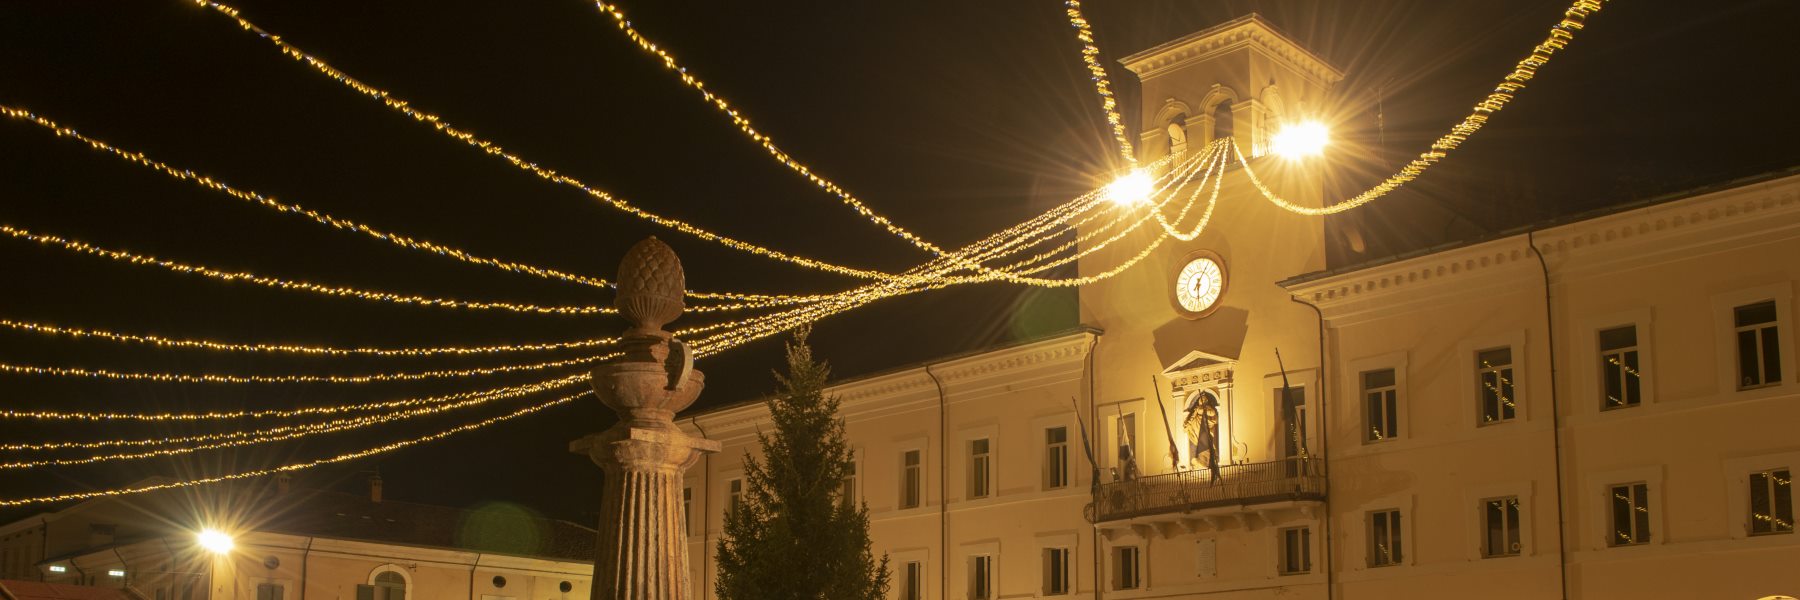 1 - Christmas Lights in Piazza Garibaldi